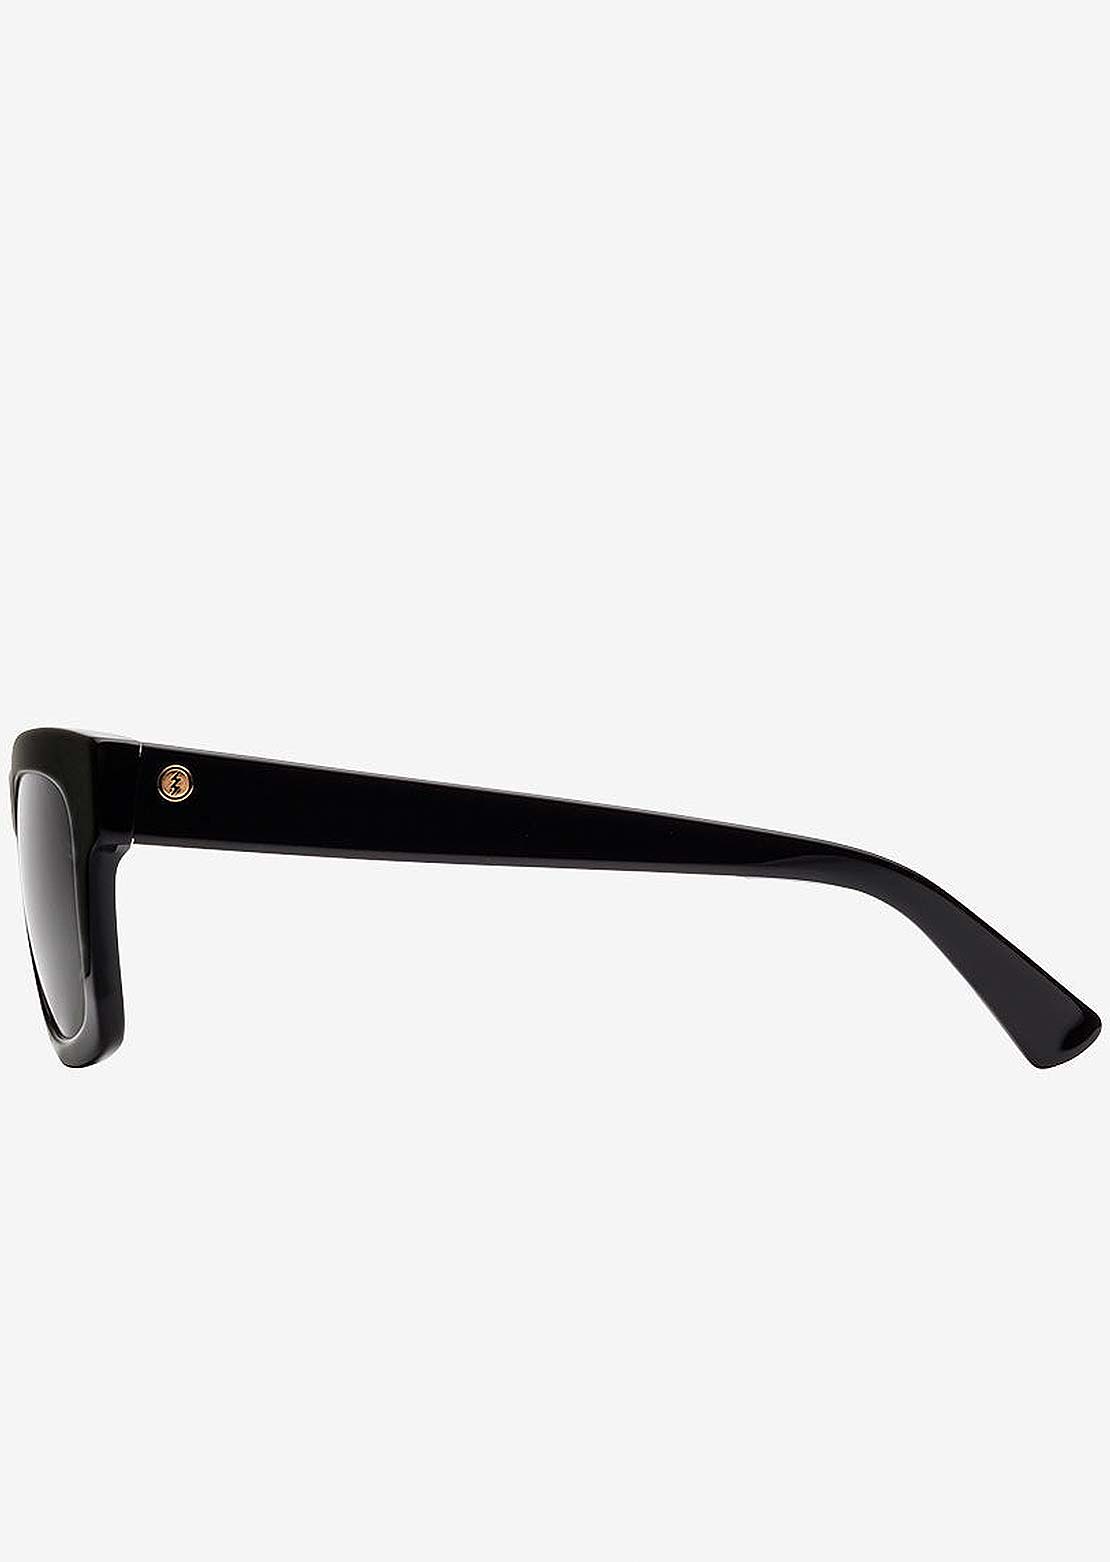 Electric Crasher 49 Polarized Sunglasses Gloss Black/Grey Polarized